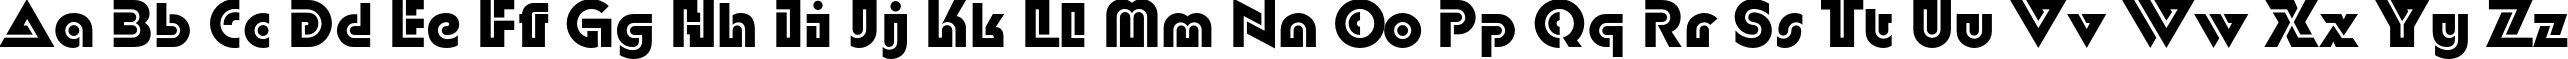 Пример написания английского алфавита шрифтом Dublon Bold